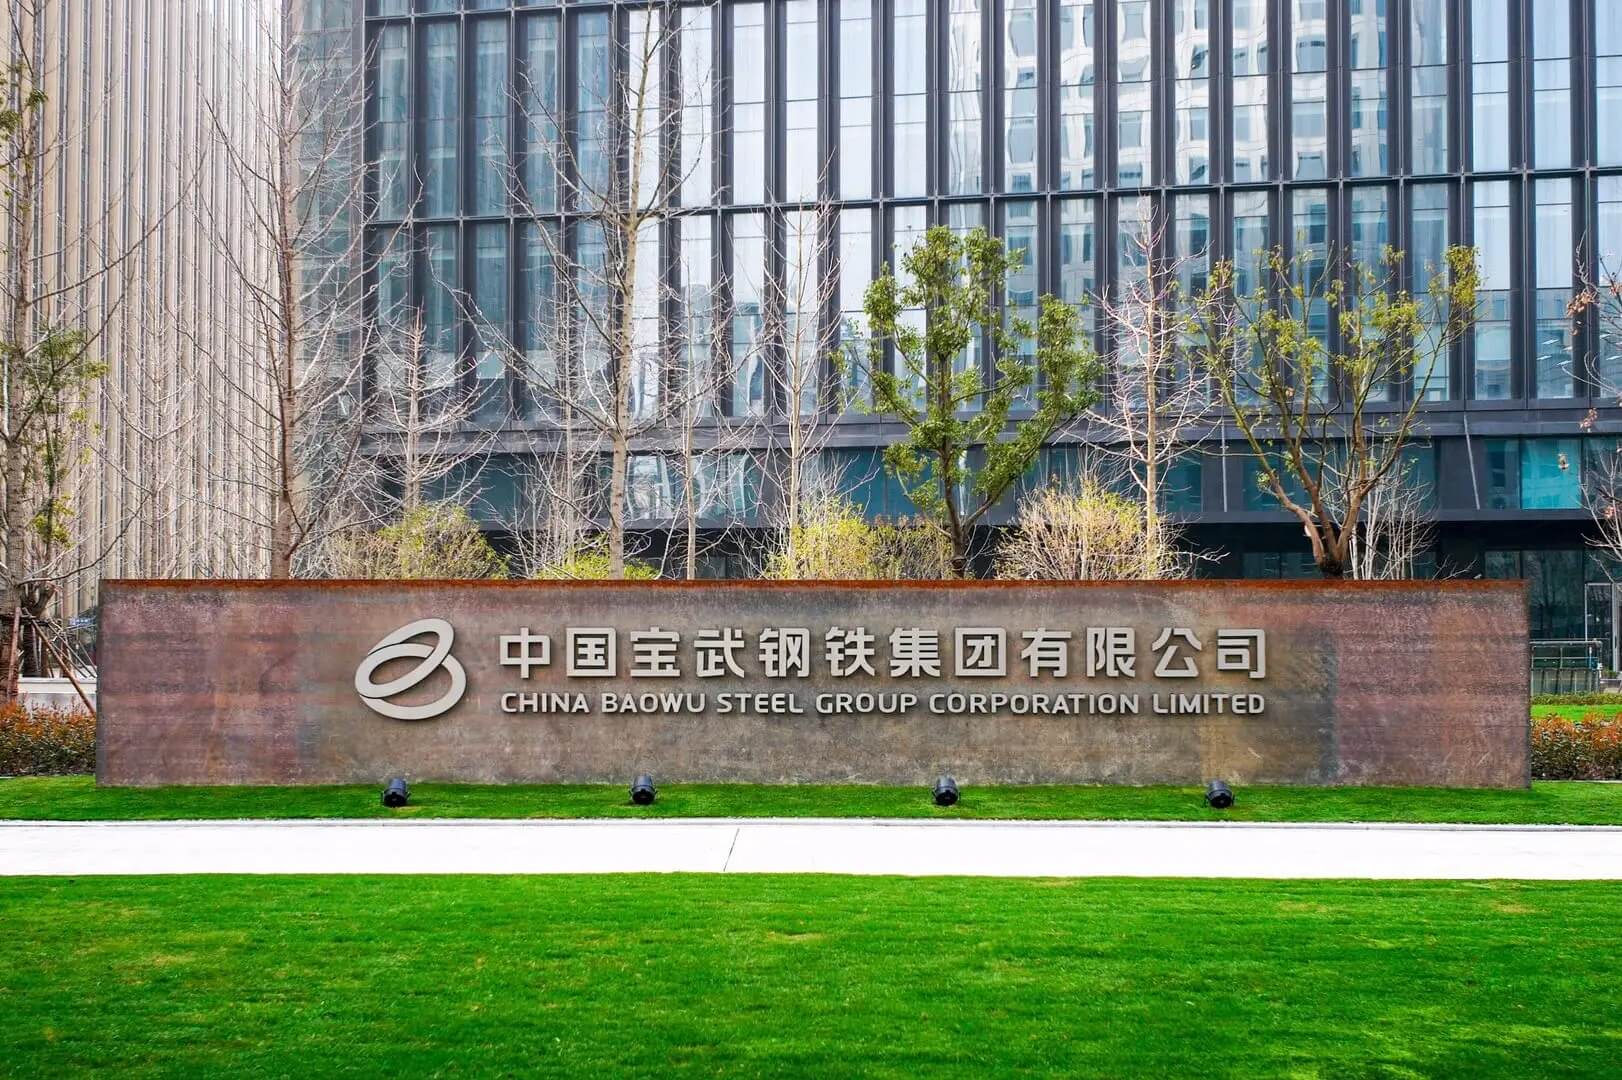 China Baowu Steel Corporation